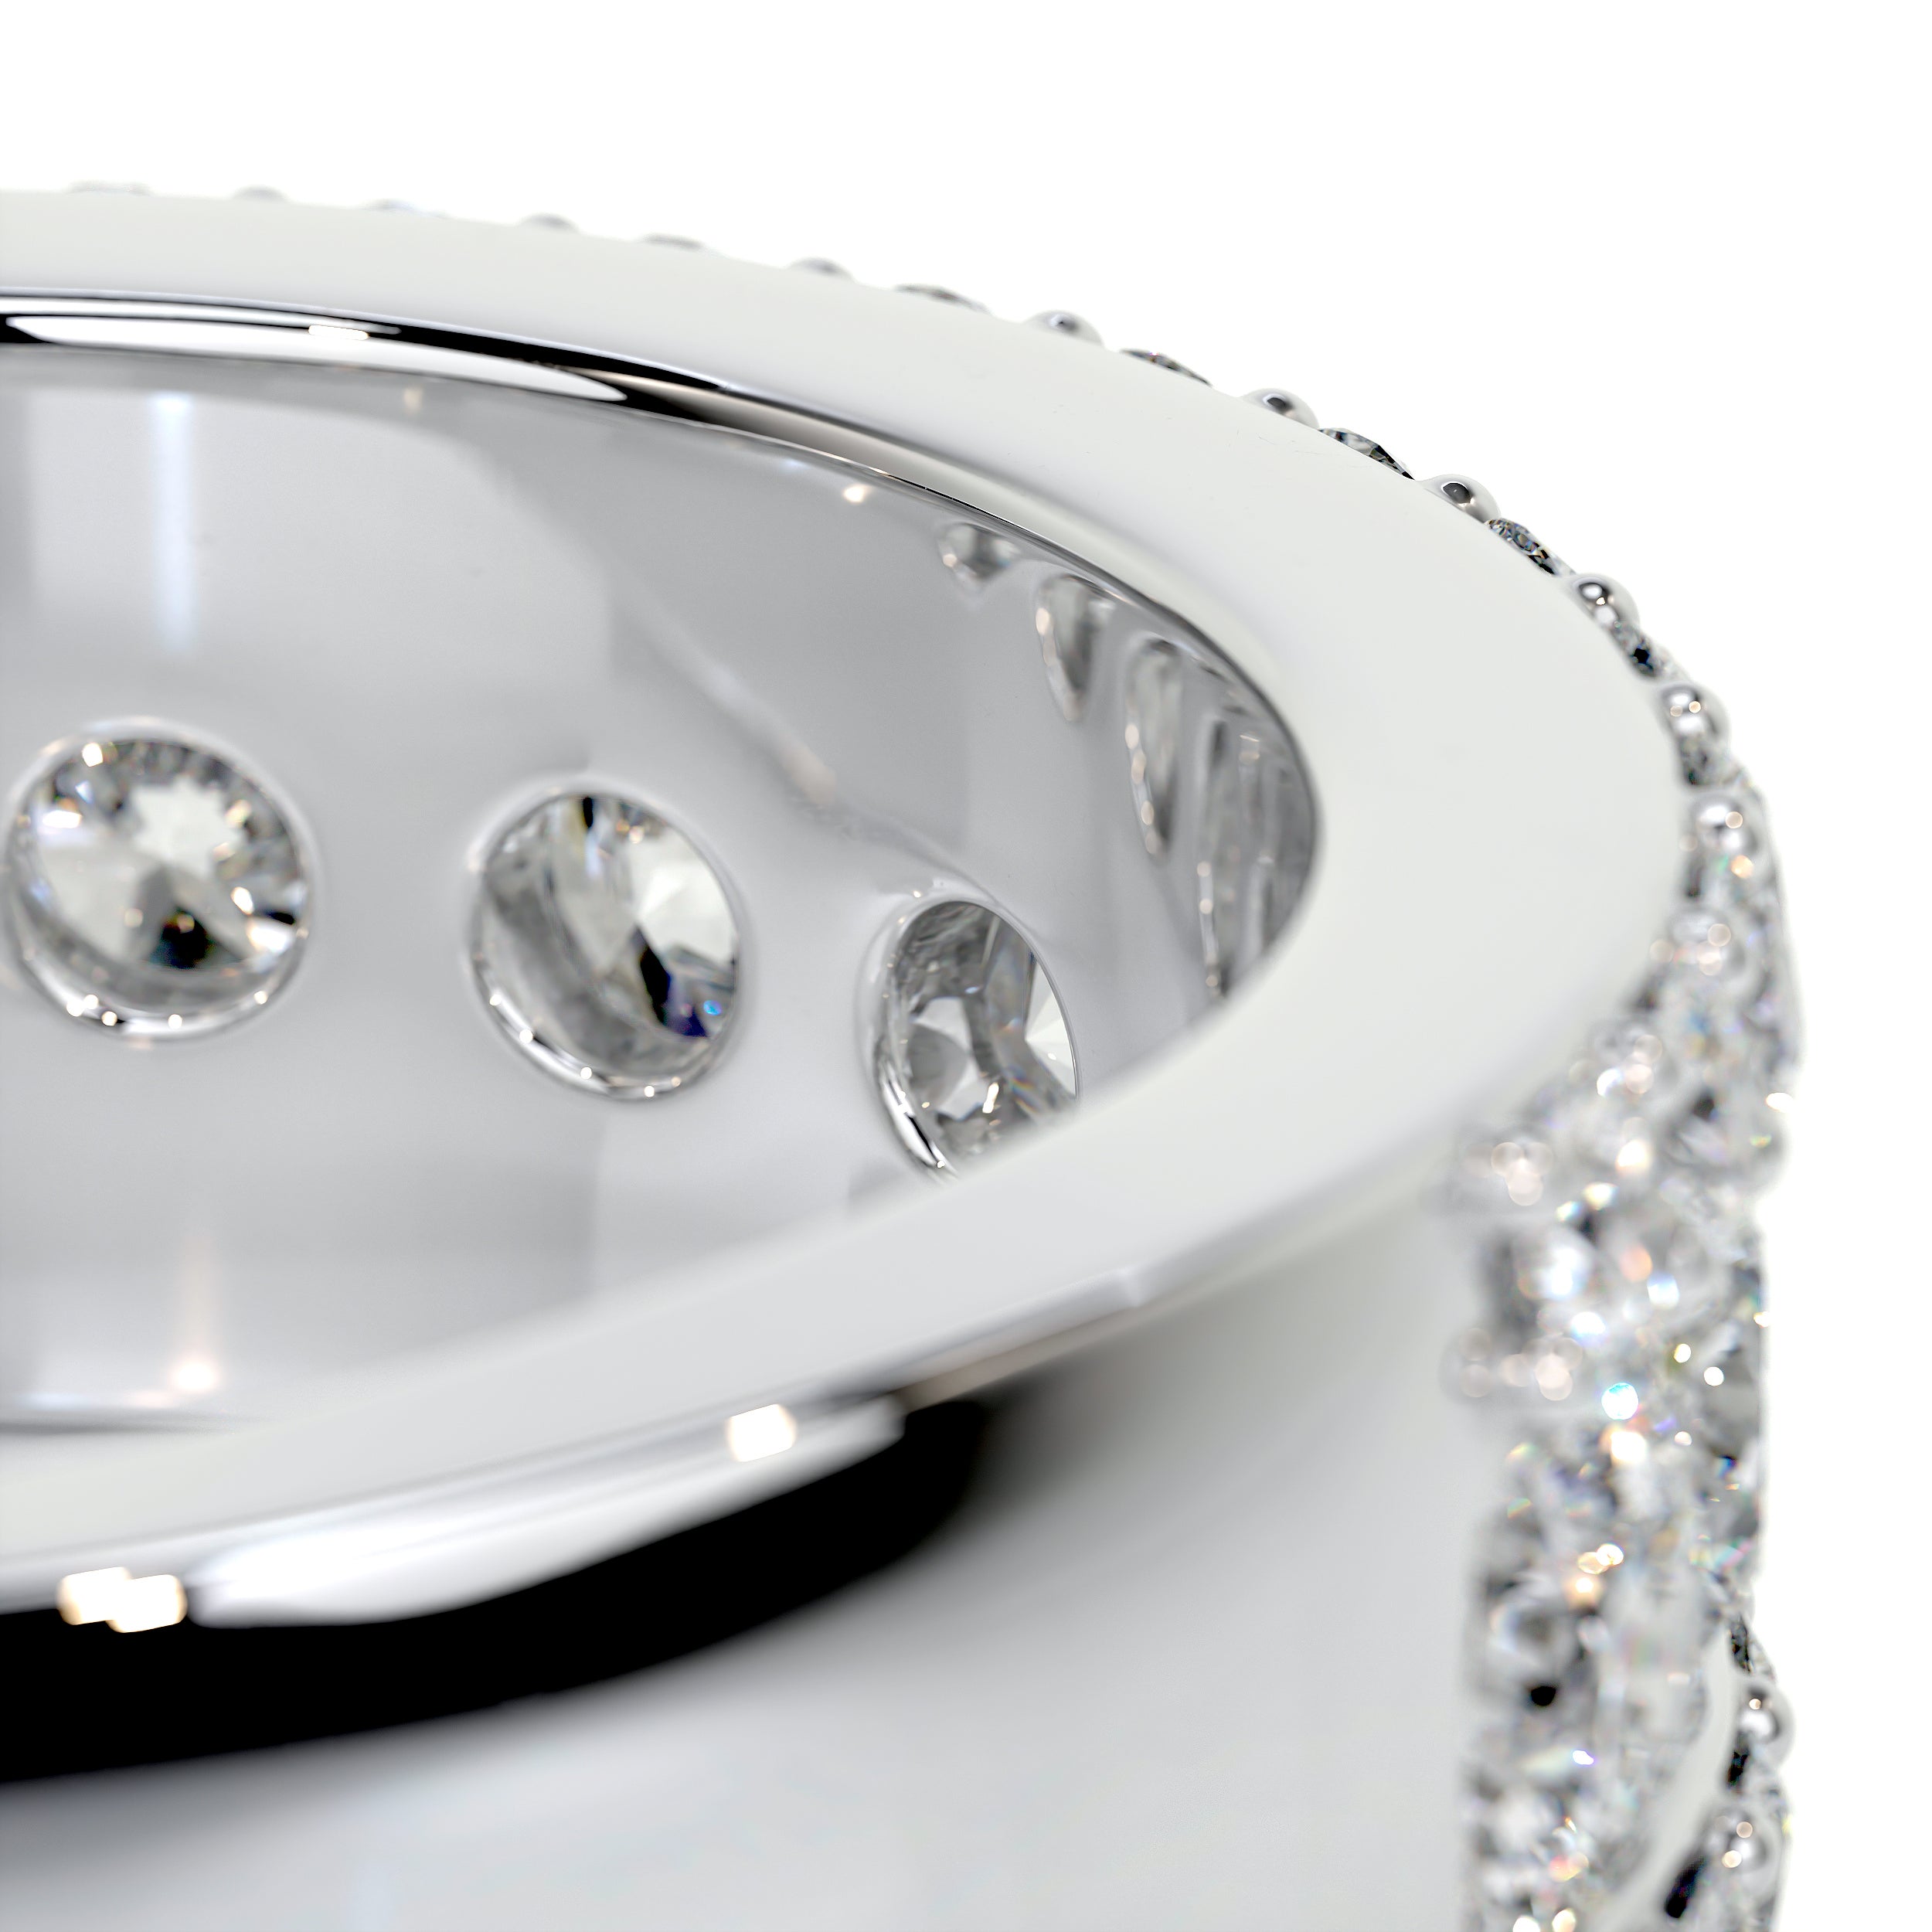 Nia Diamond Wedding Ring   (2 Carat) -Platinum